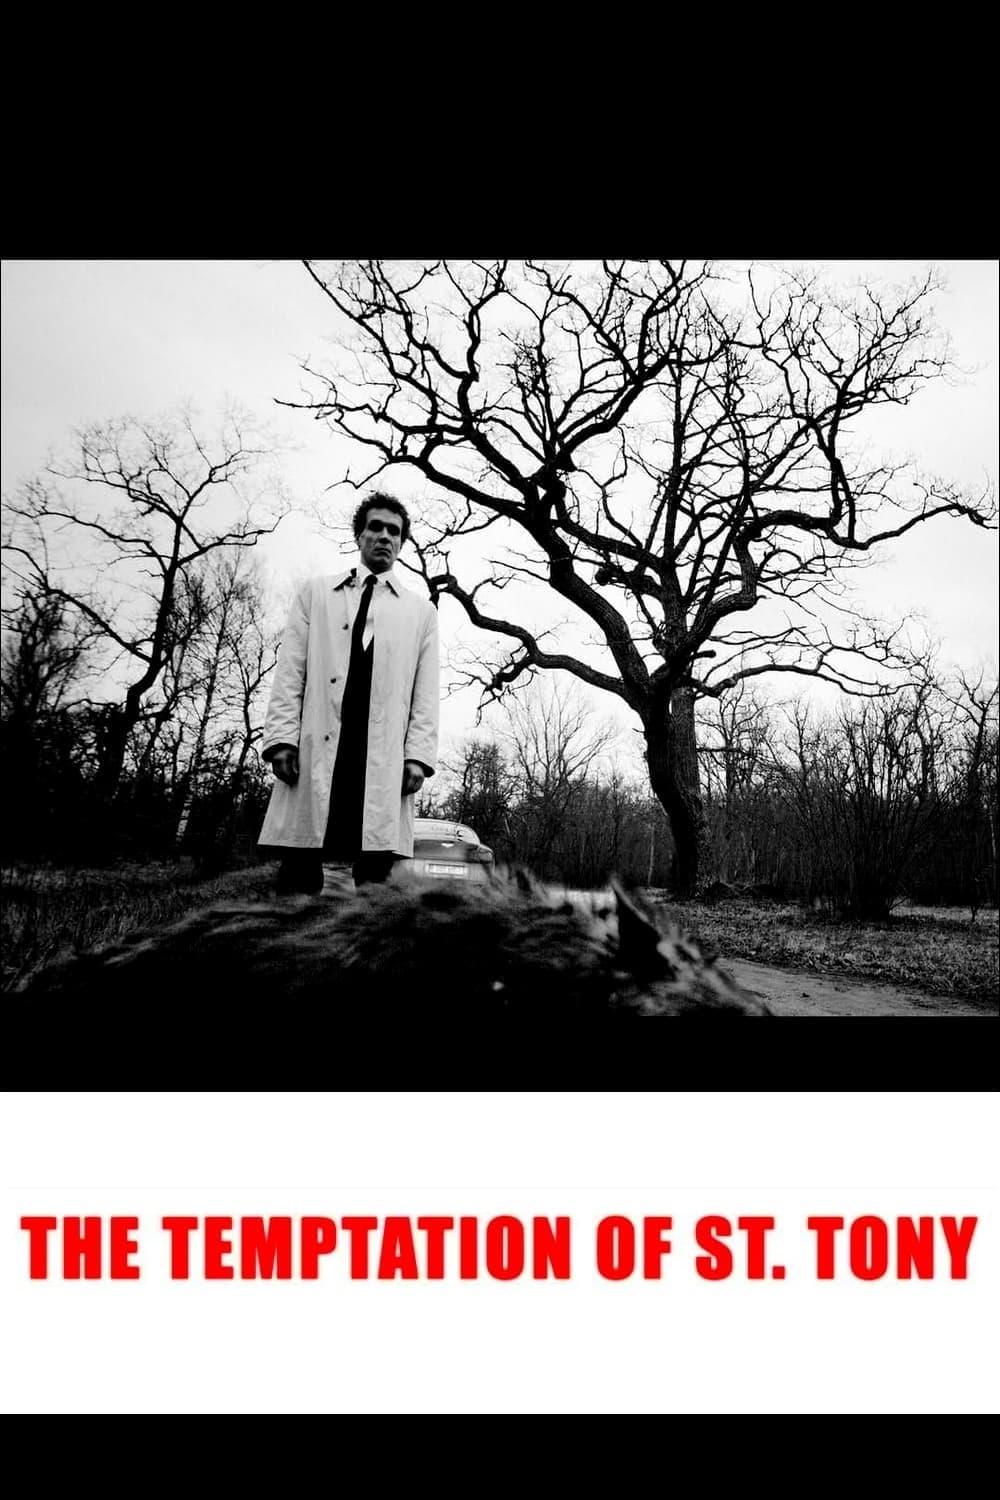 The Temptation of St. Tony poster